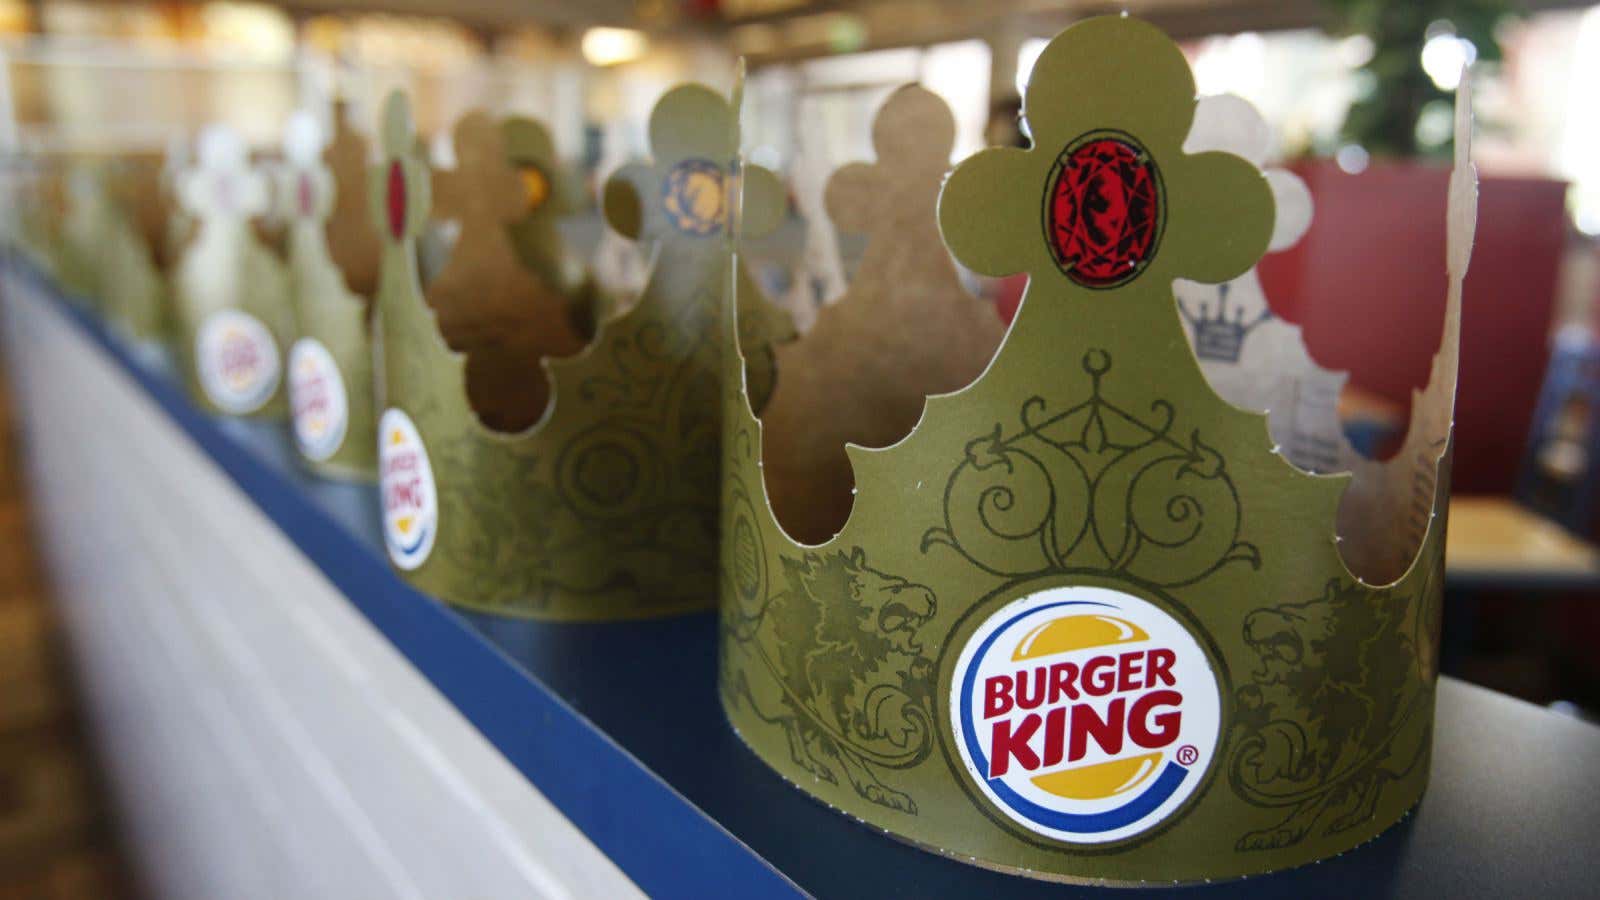 King of Veggie Burgers, too.